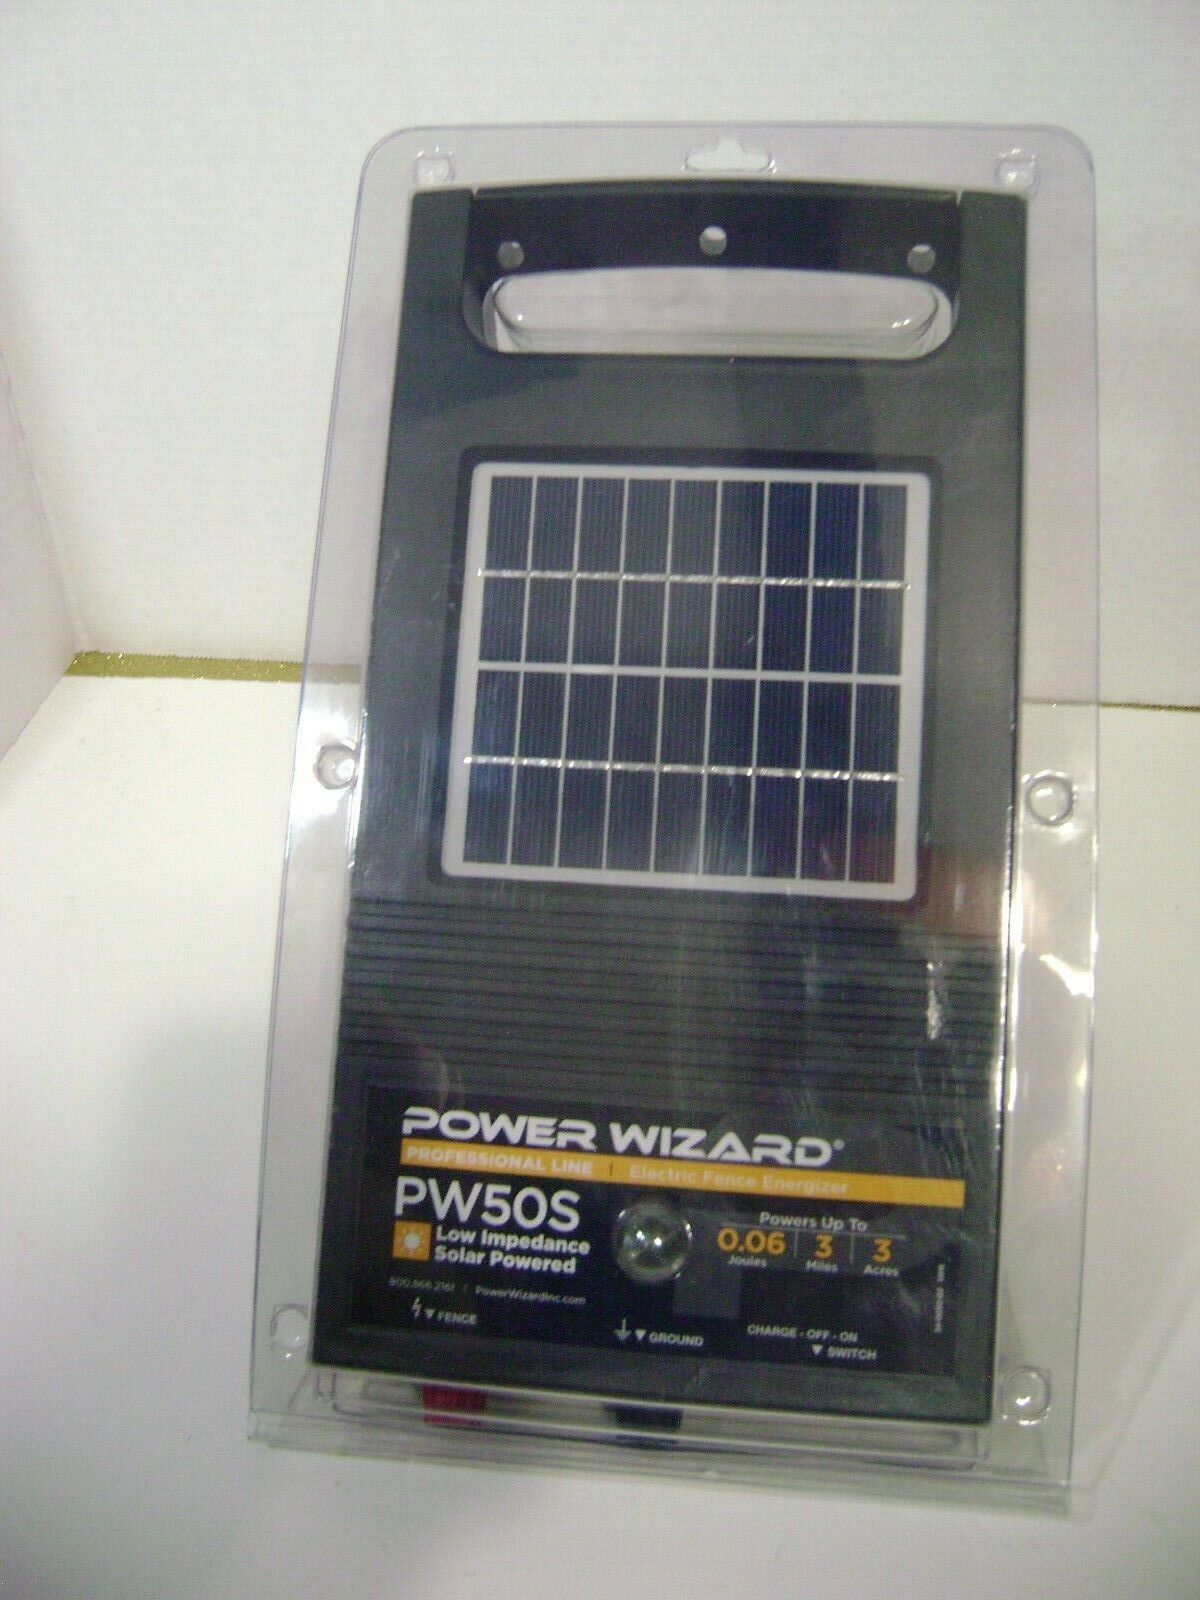 Power Wizard PW50S .06 Joule - Solar Low Impedance Fence Energizer -3 Acres